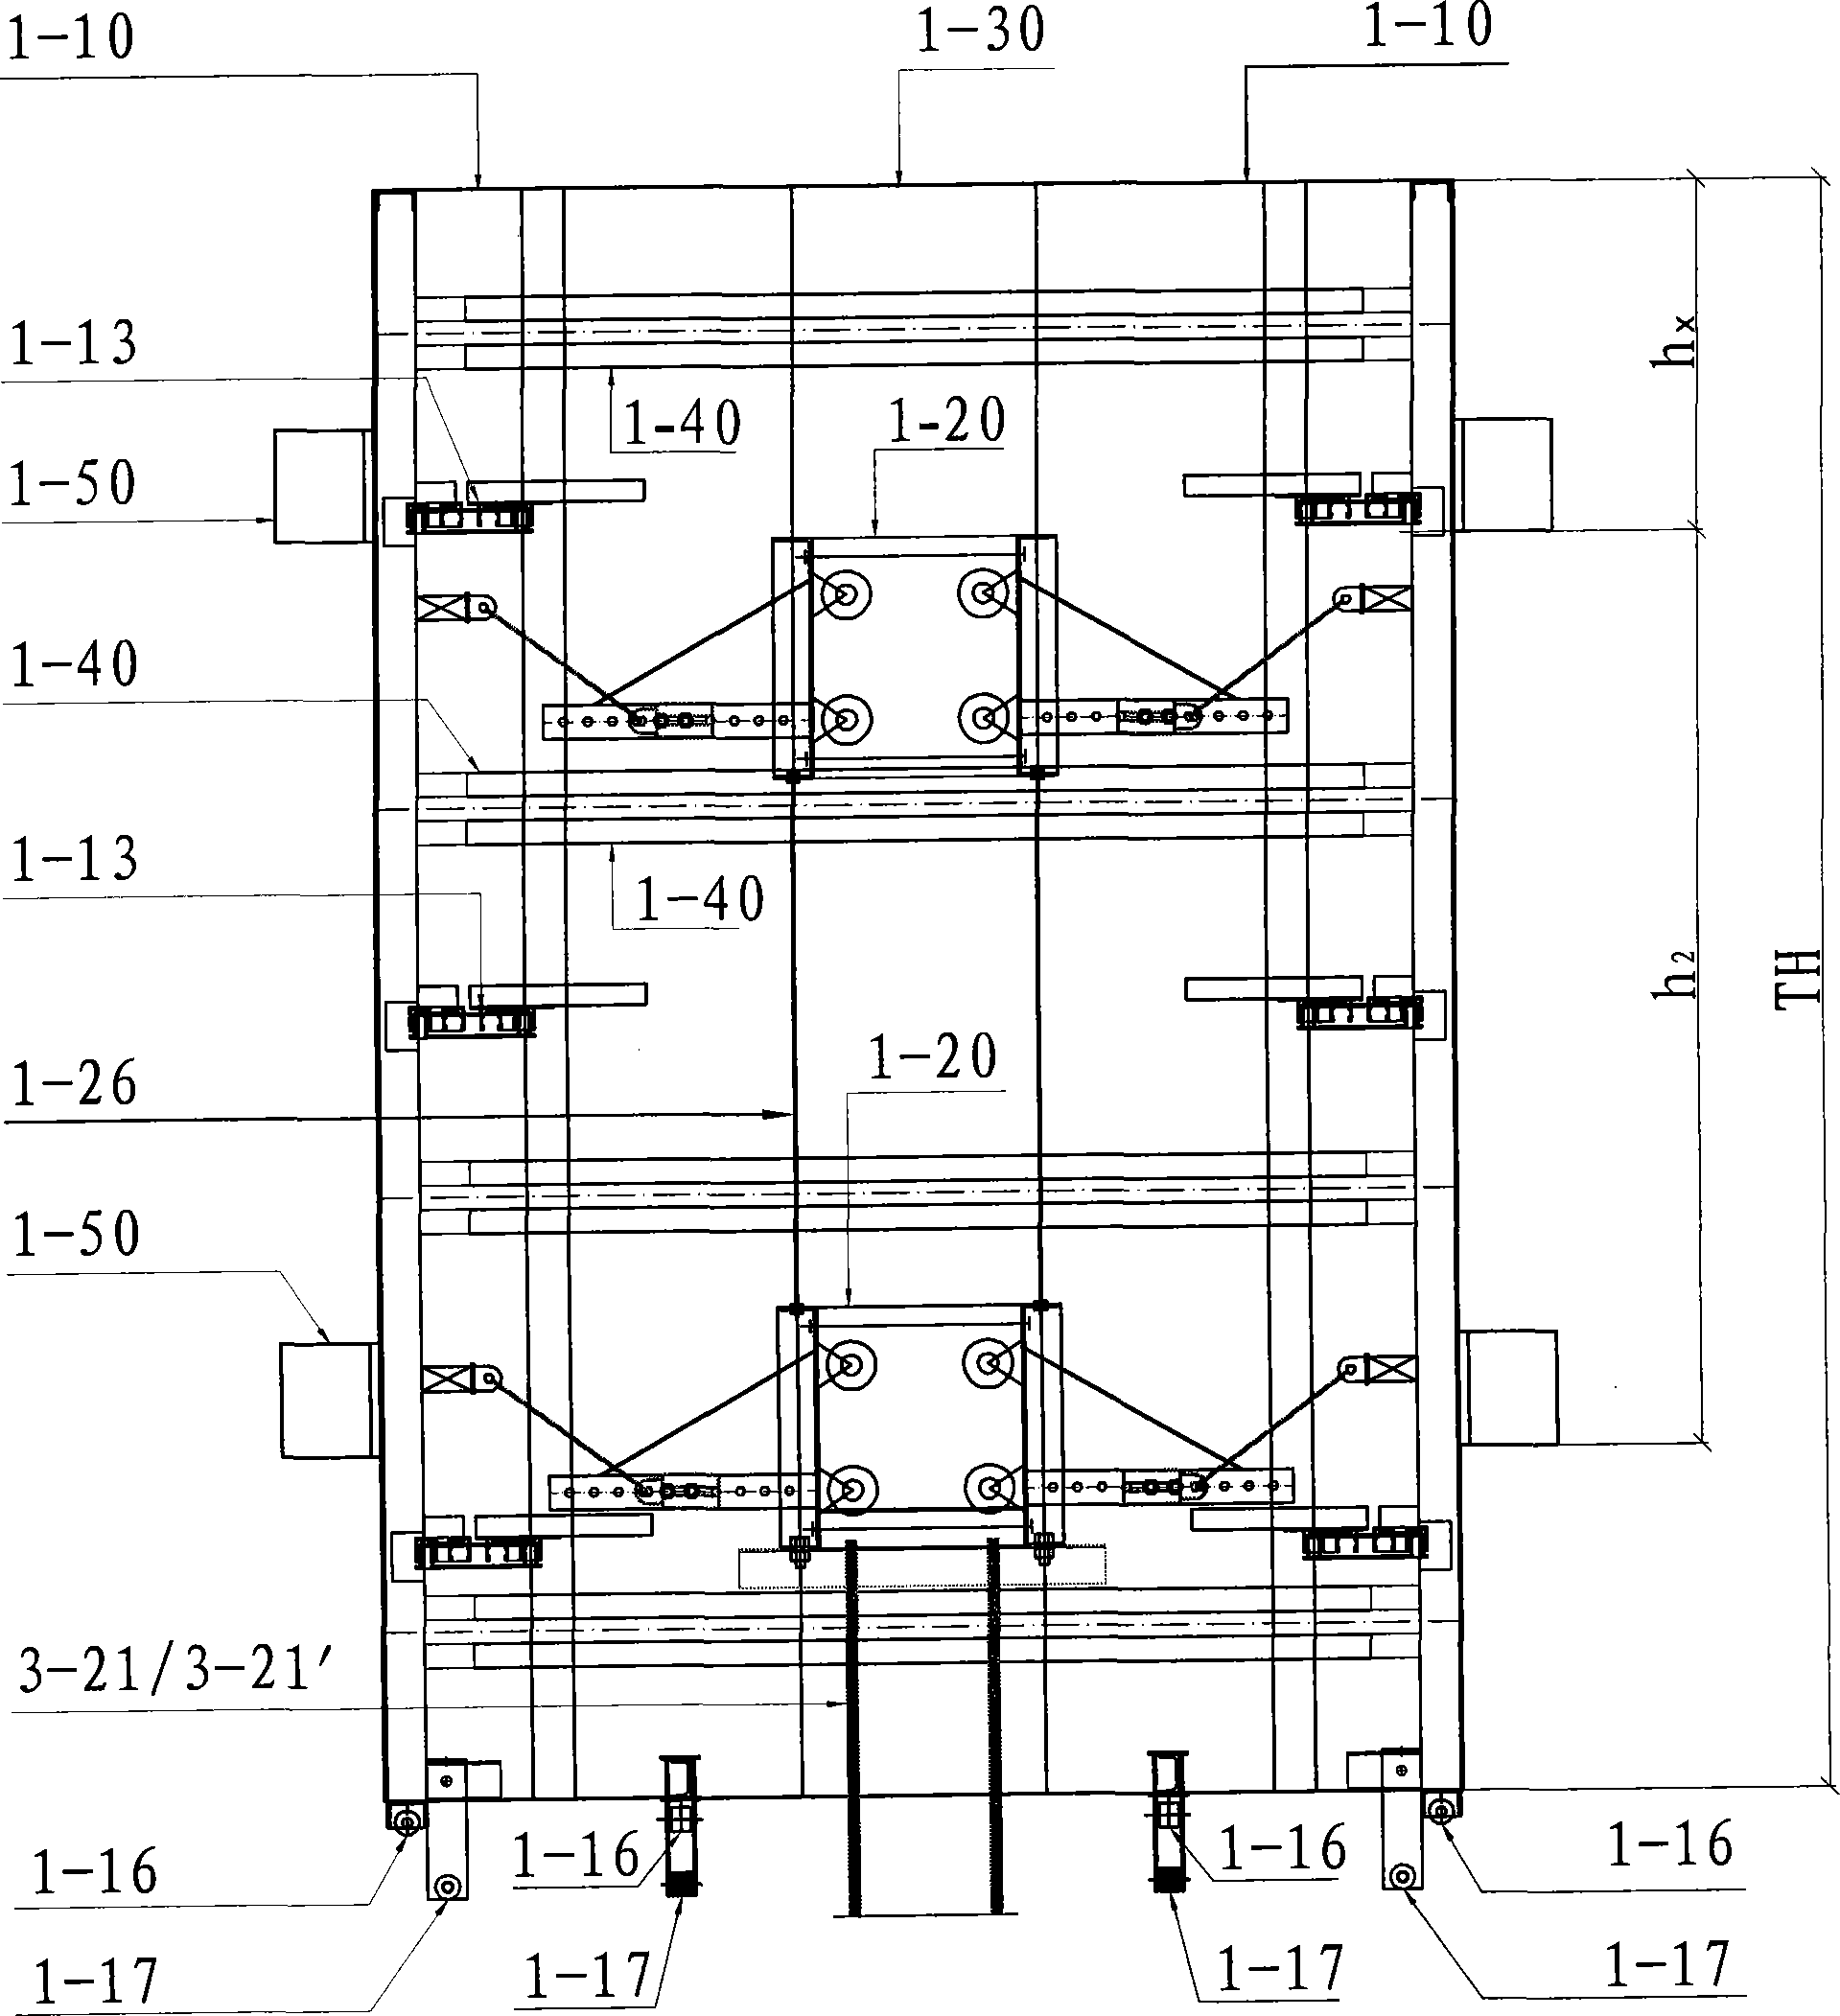 Instrumental climbing formwork for building vertical shaft/elevator shaft